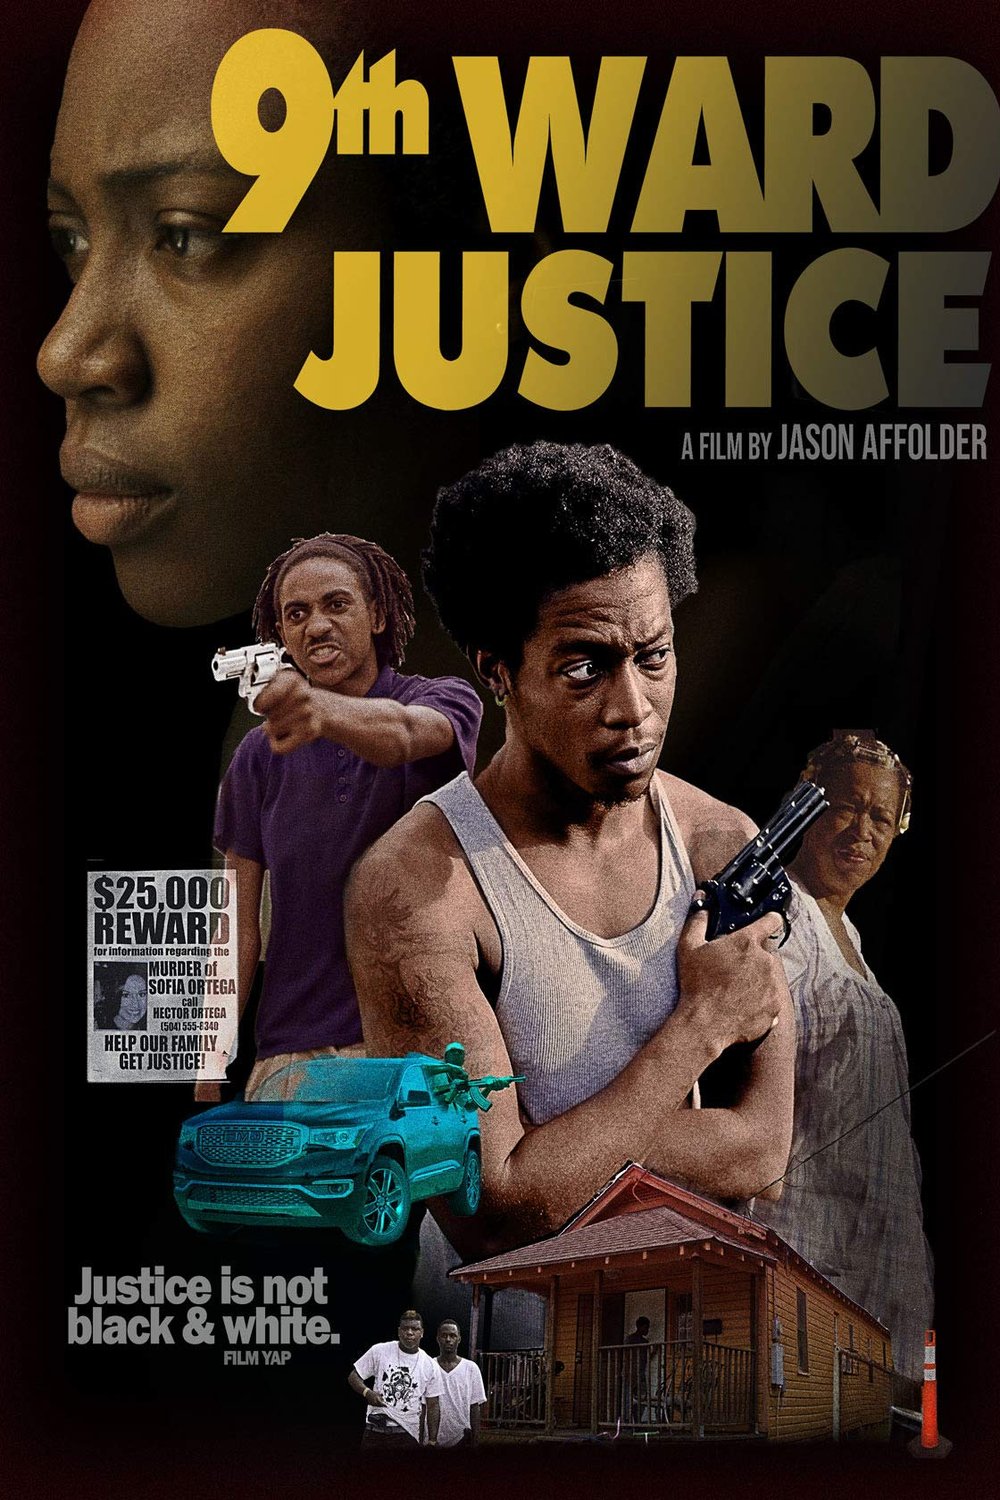 L'affiche du film 9th Ward Justice